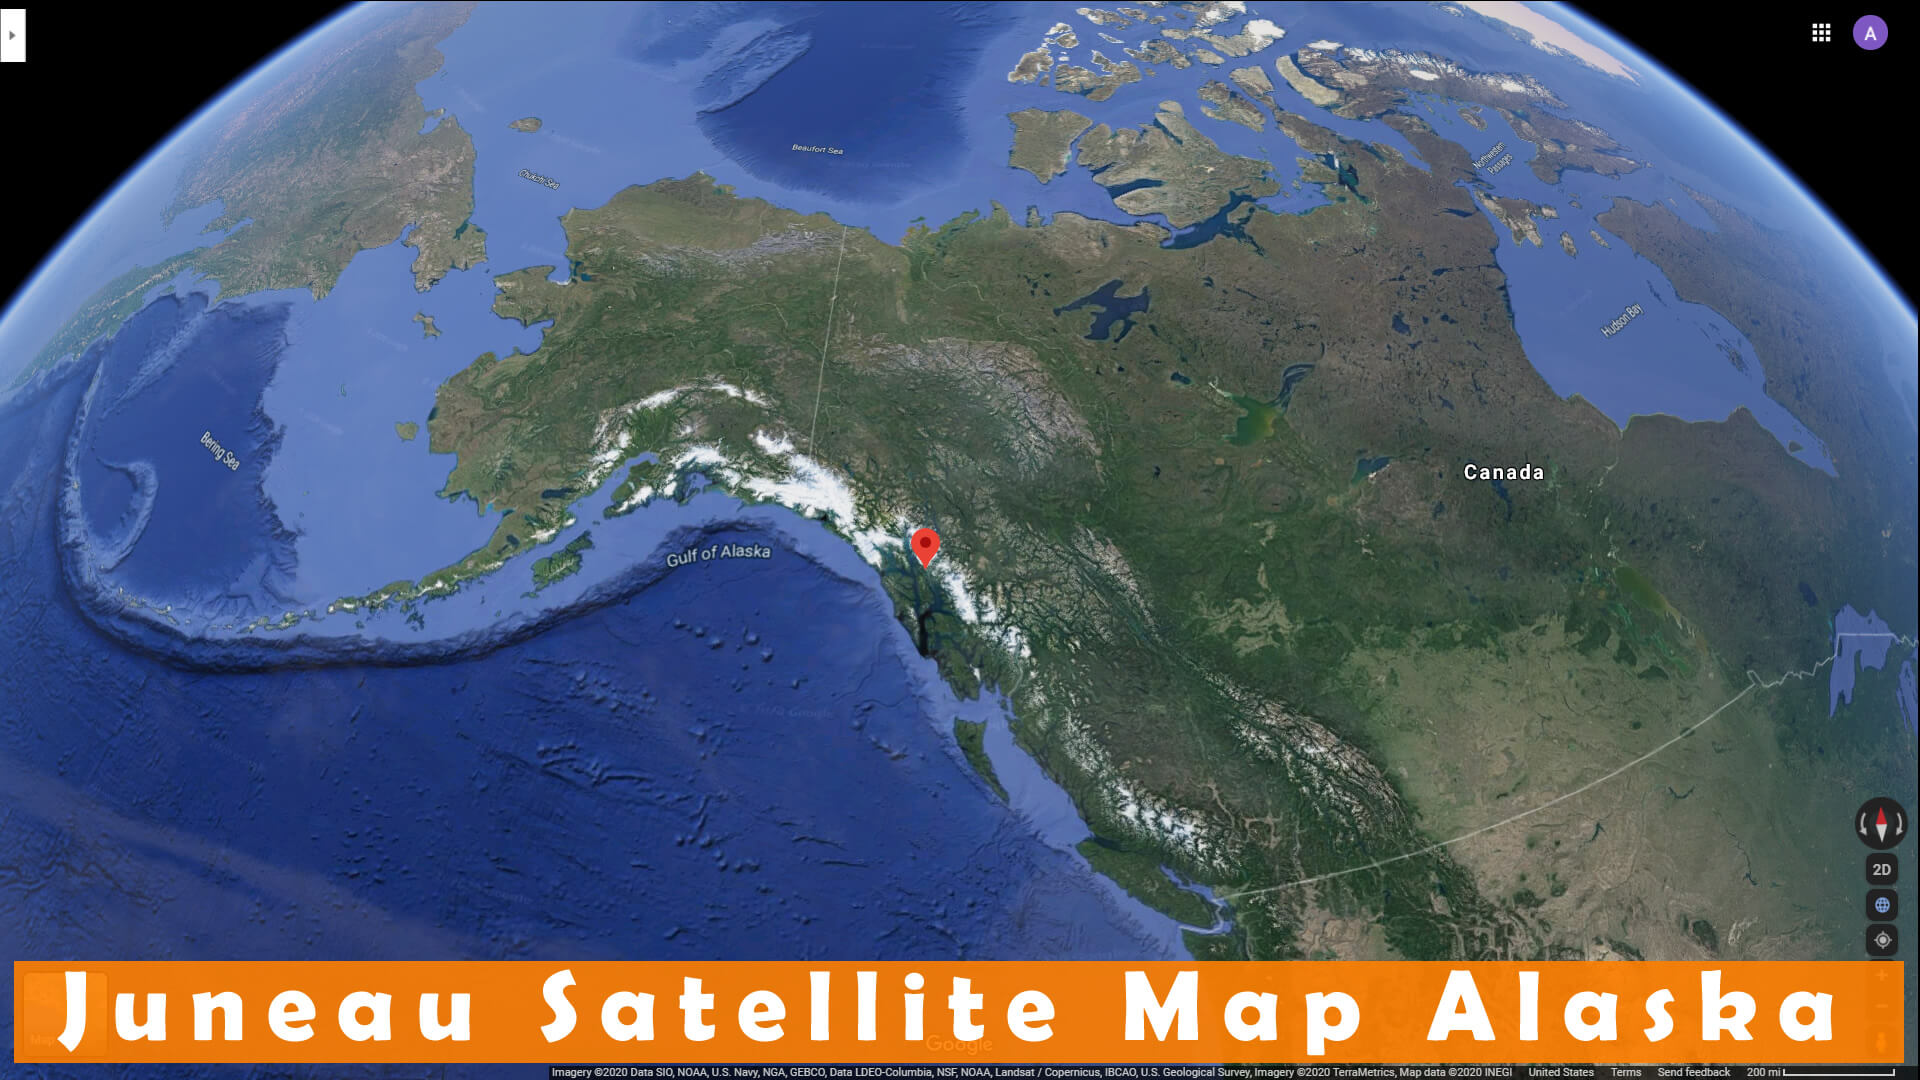 Juneau Satellite Map Alaska